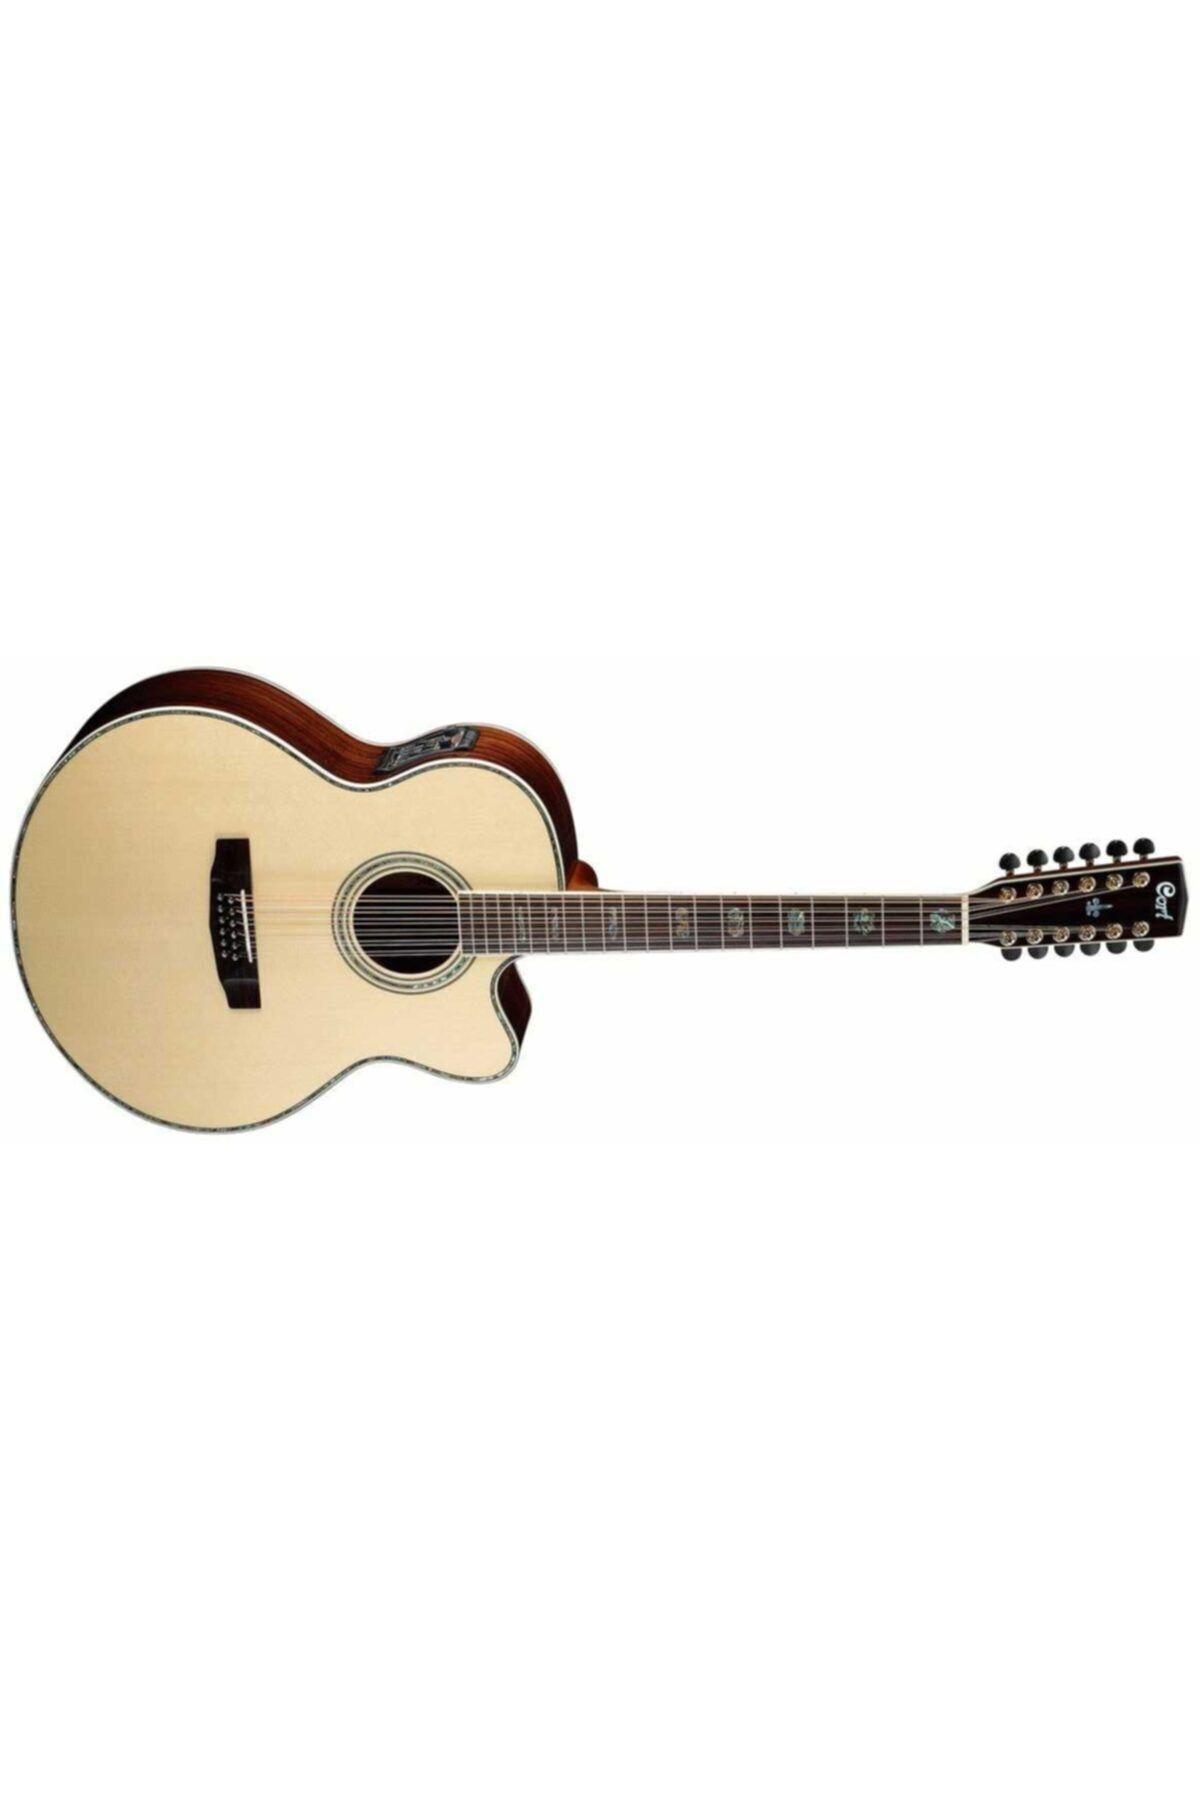 Yıldızan Cj10x12nat E.akustik Gitar, 12 Telli Jumbo Cutaway, Nat? - GTR-750